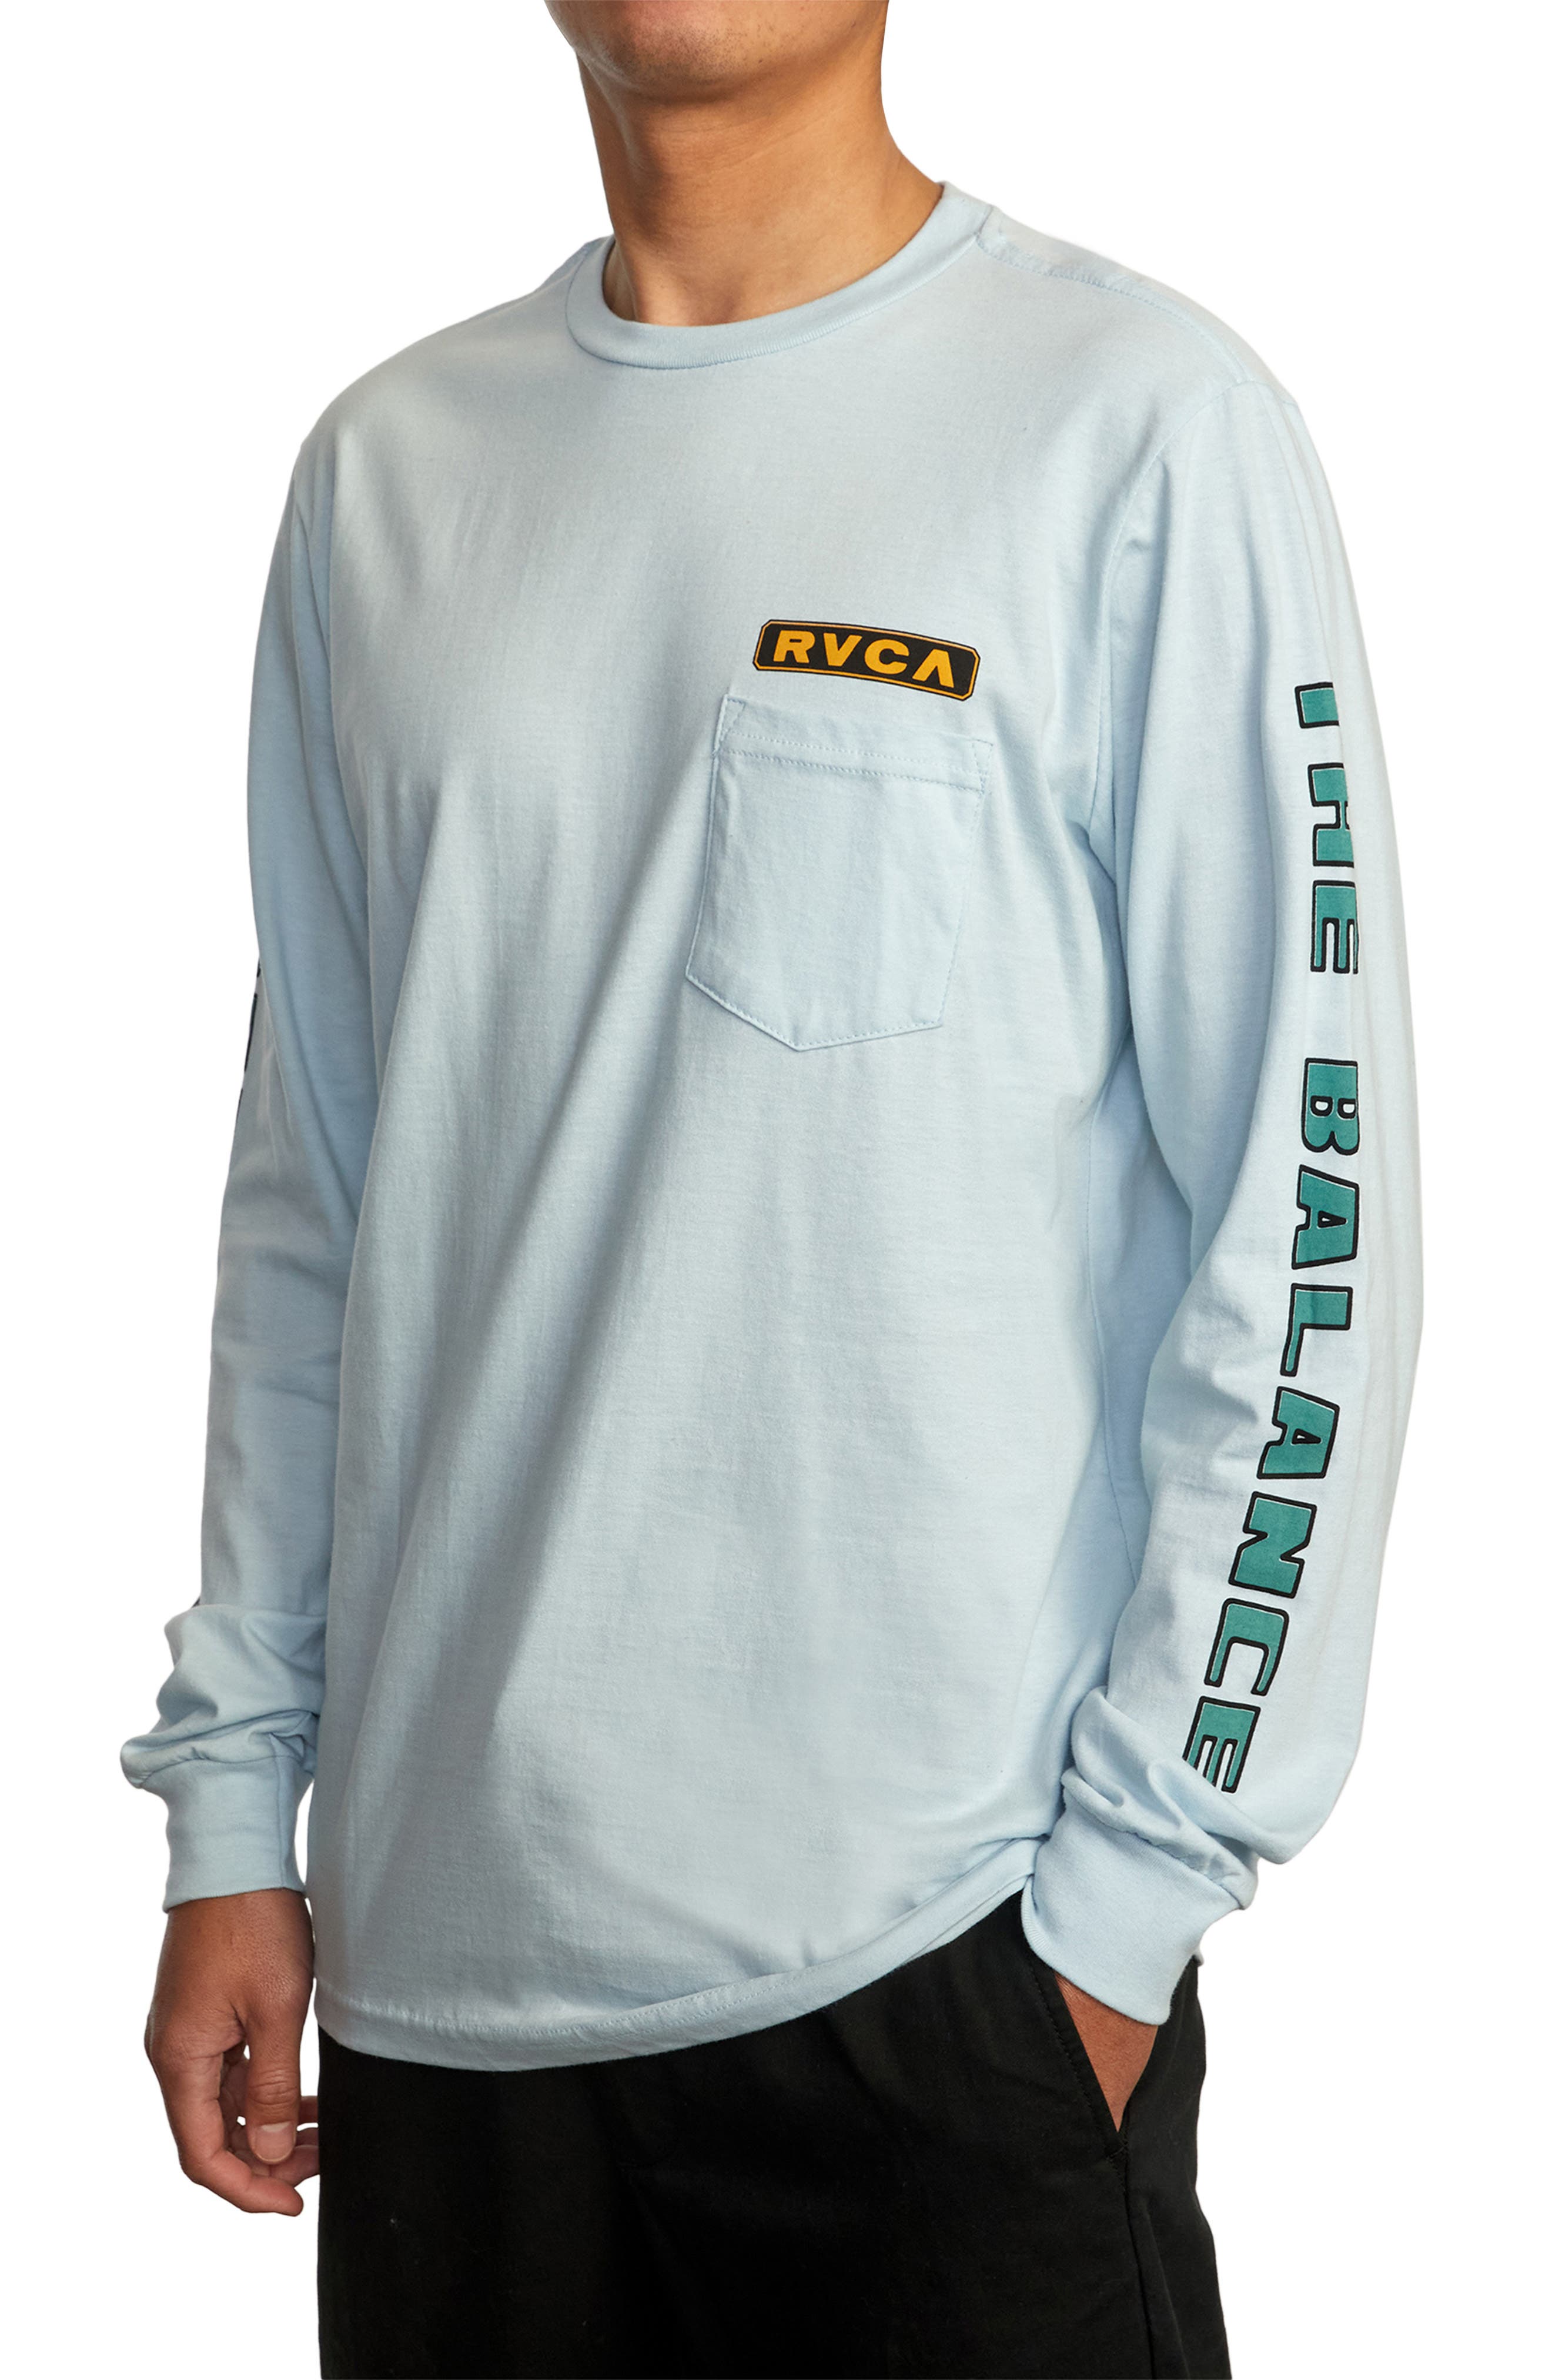 RVCA Men's Graphic Long Sleeve Crew Neck Tee Shirt